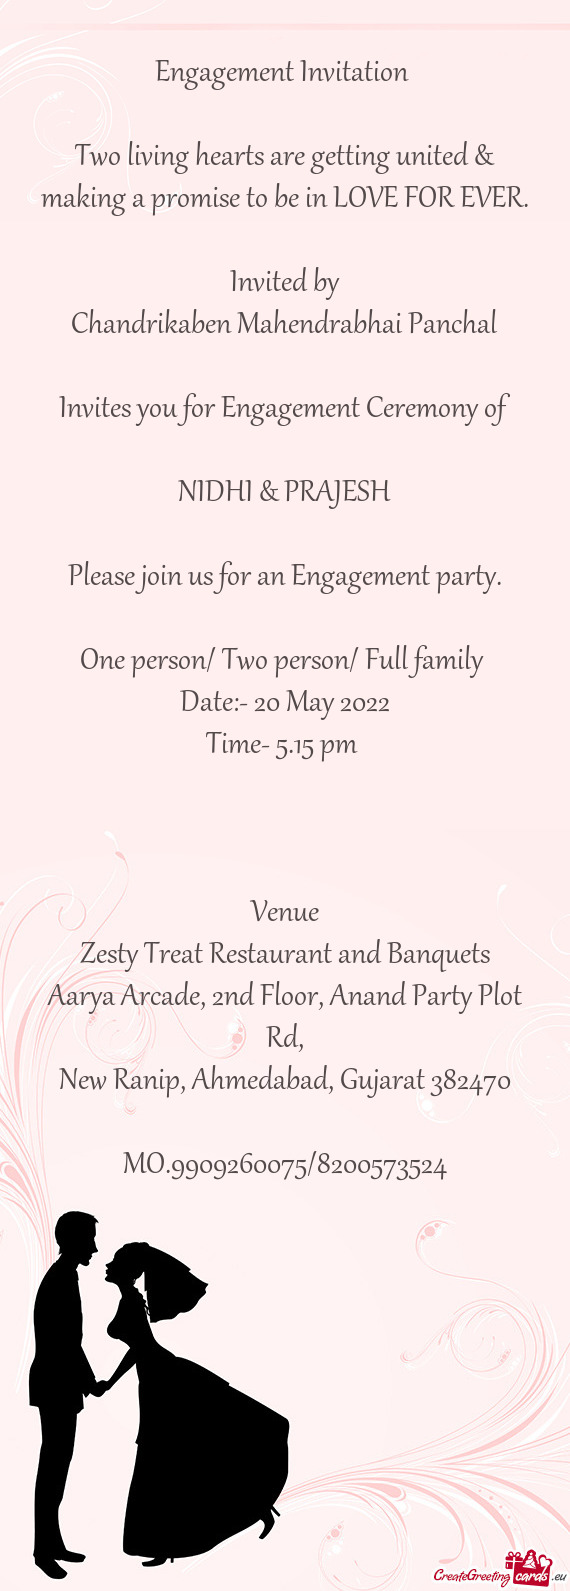 Zesty Treat Restaurant and Banquets